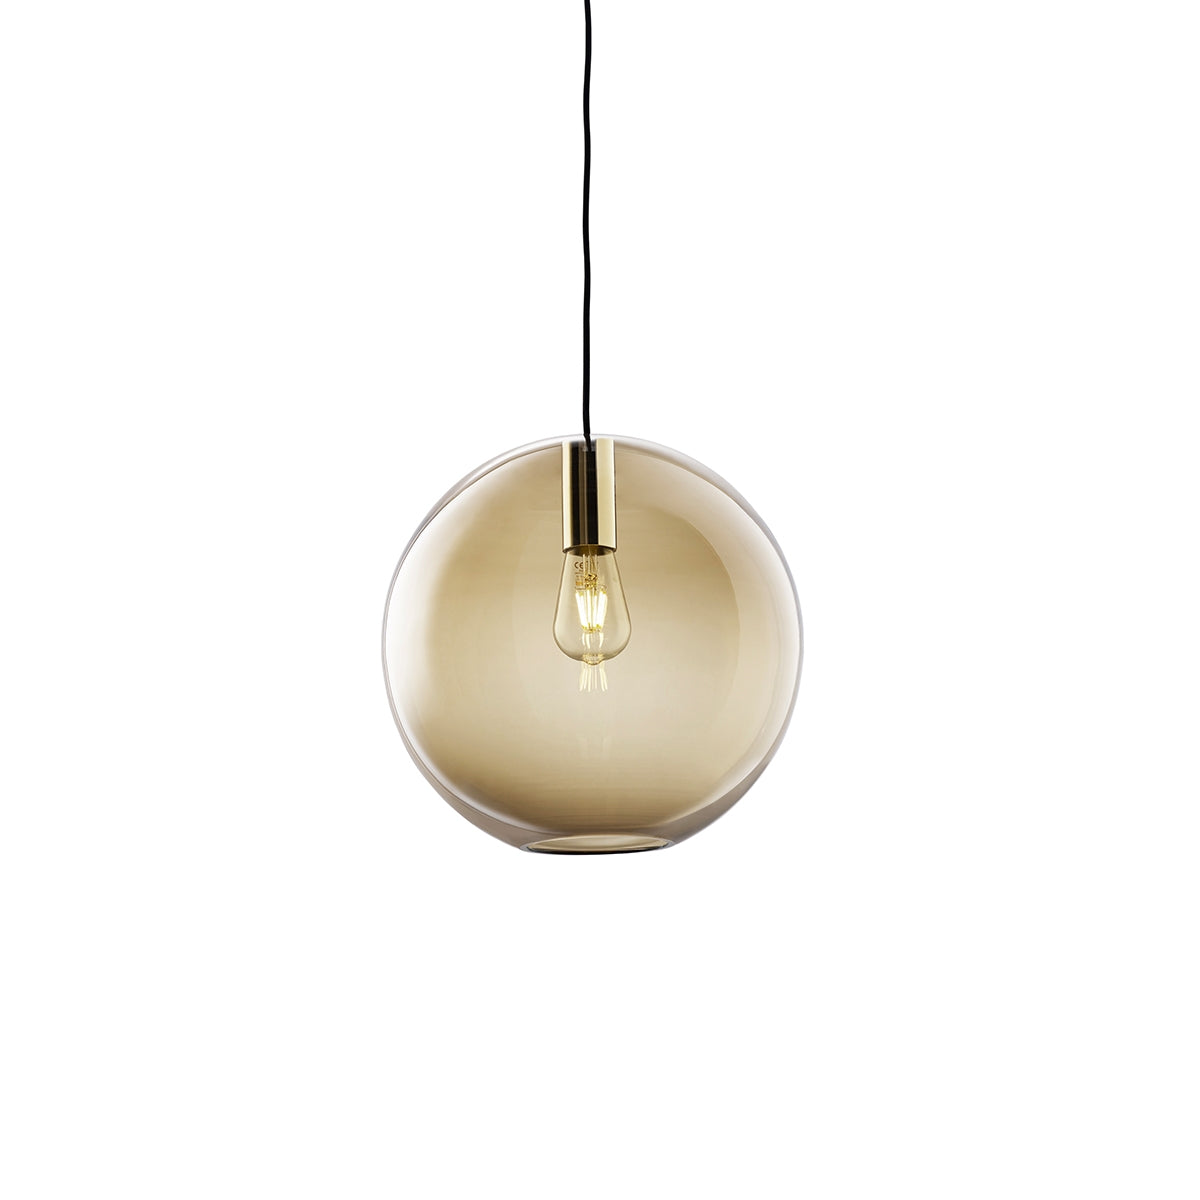 Loon Mini Ball Pendant Light by Molto Luce